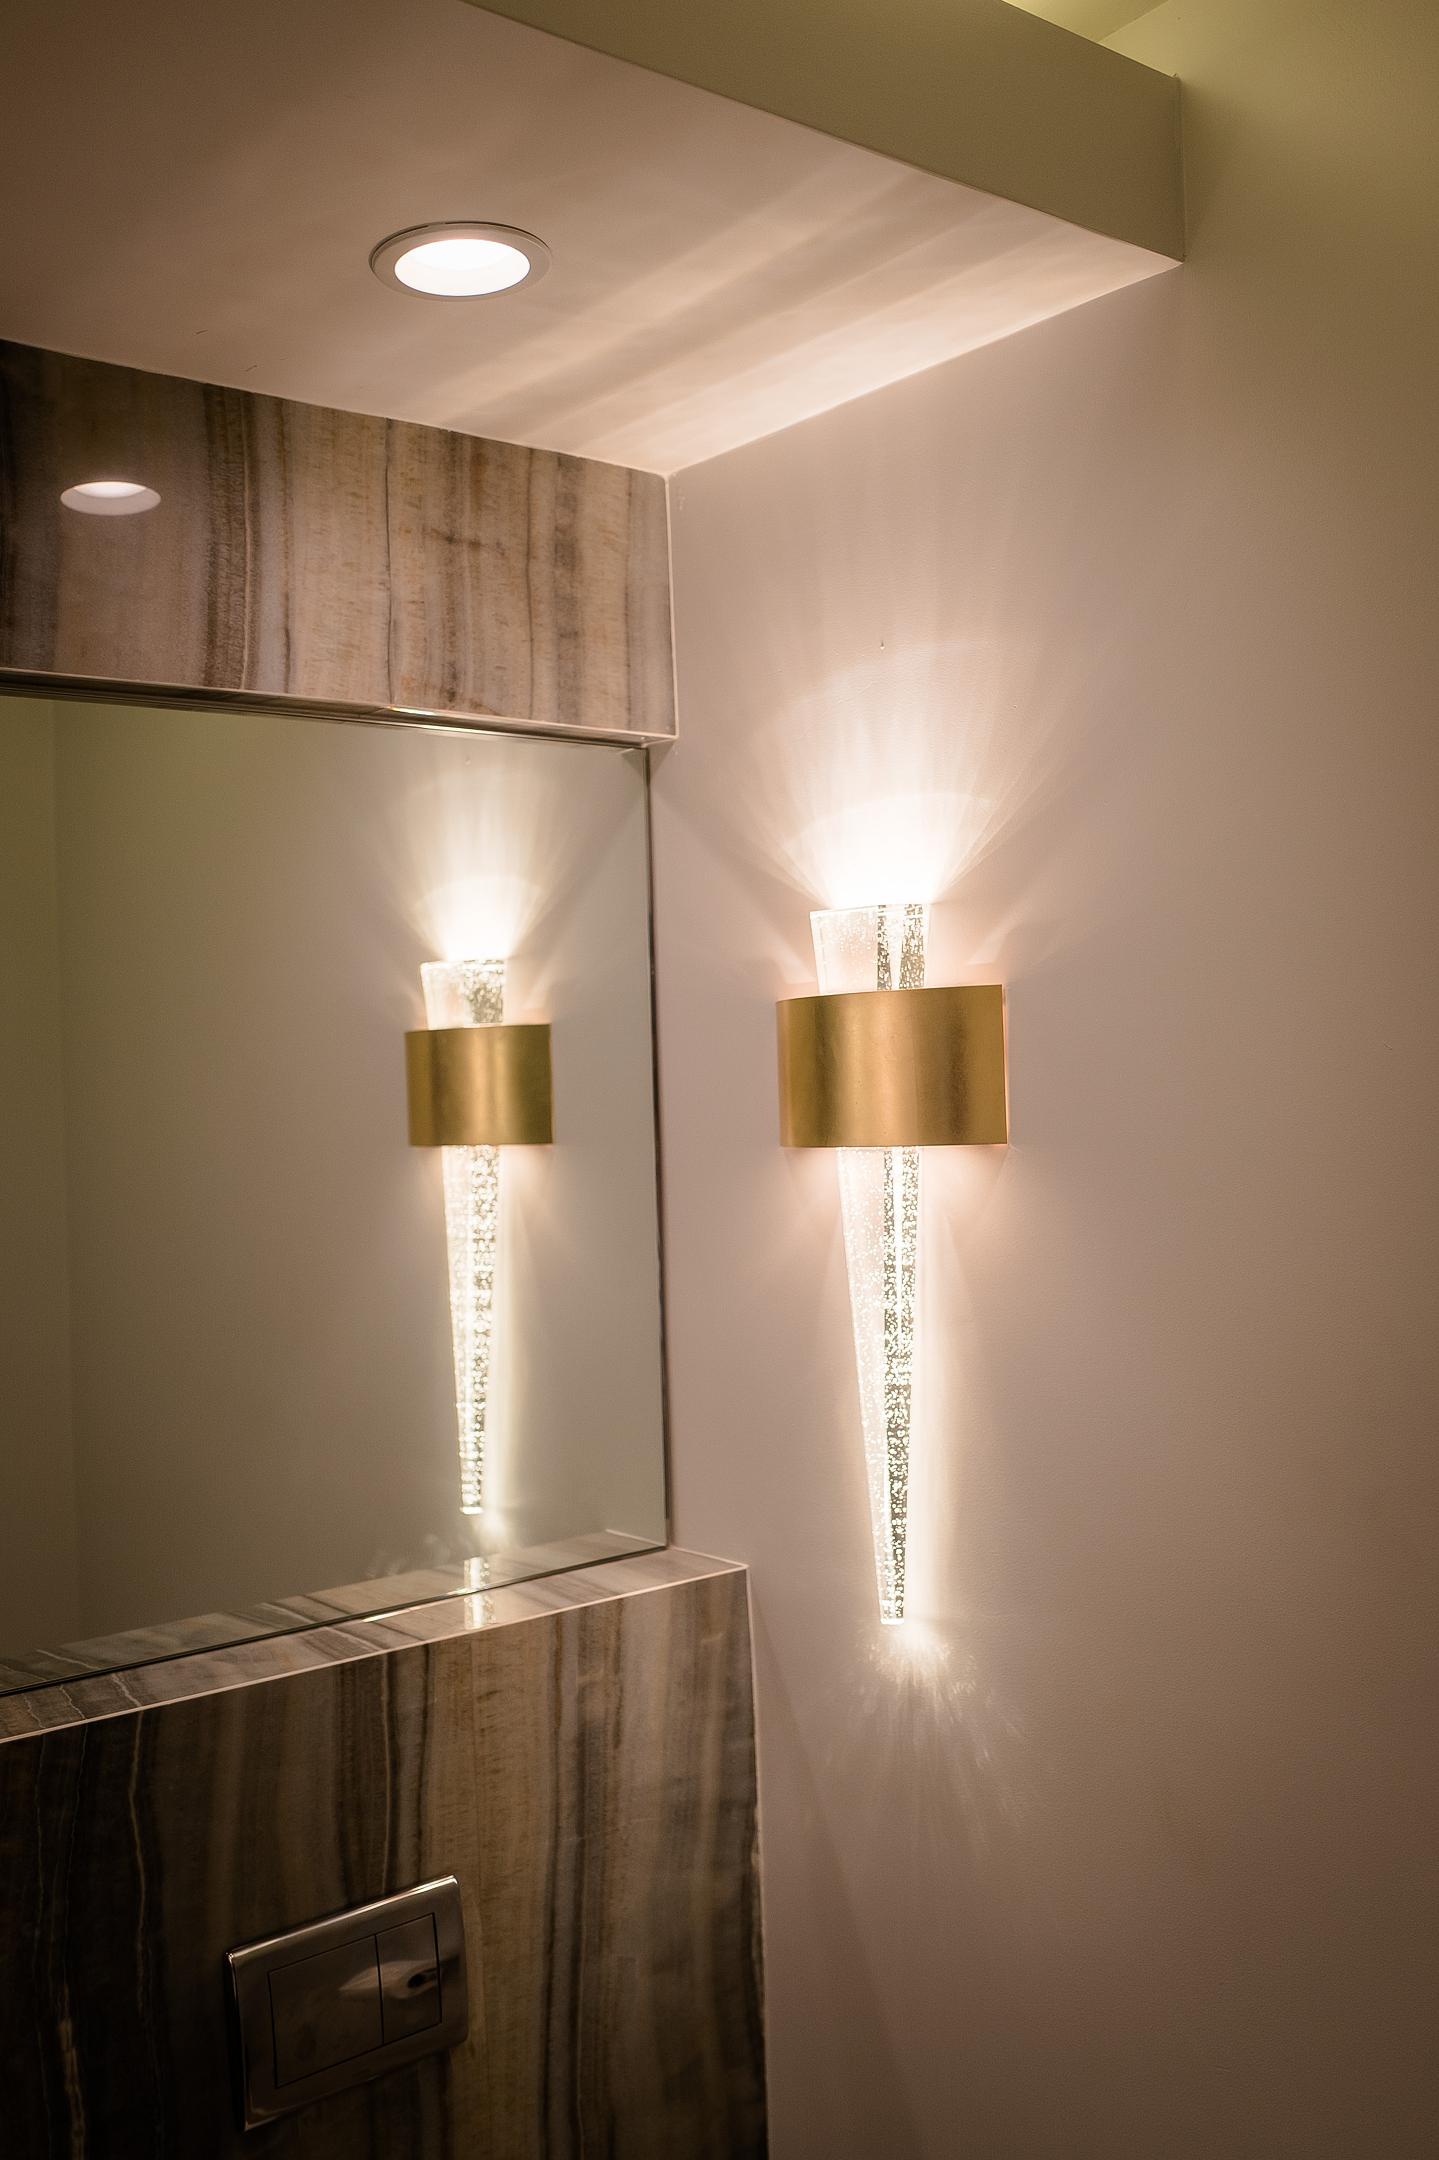 Elegant wall-mounted decorative lights in modern interior.